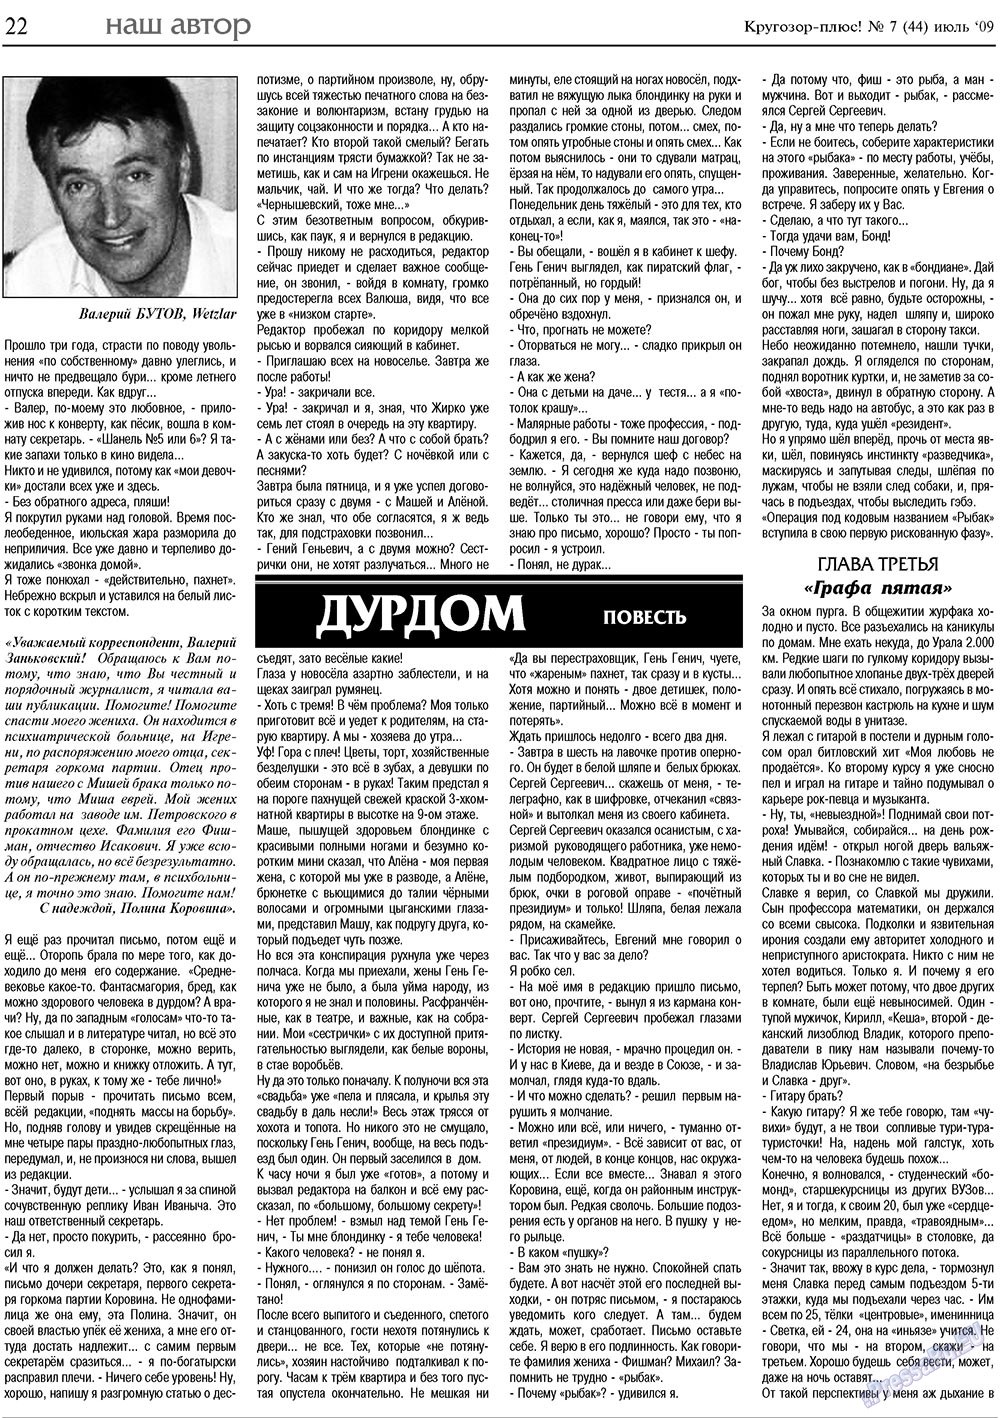 Кругозор плюс! (газета). 2009 год, номер 7, стр. 22